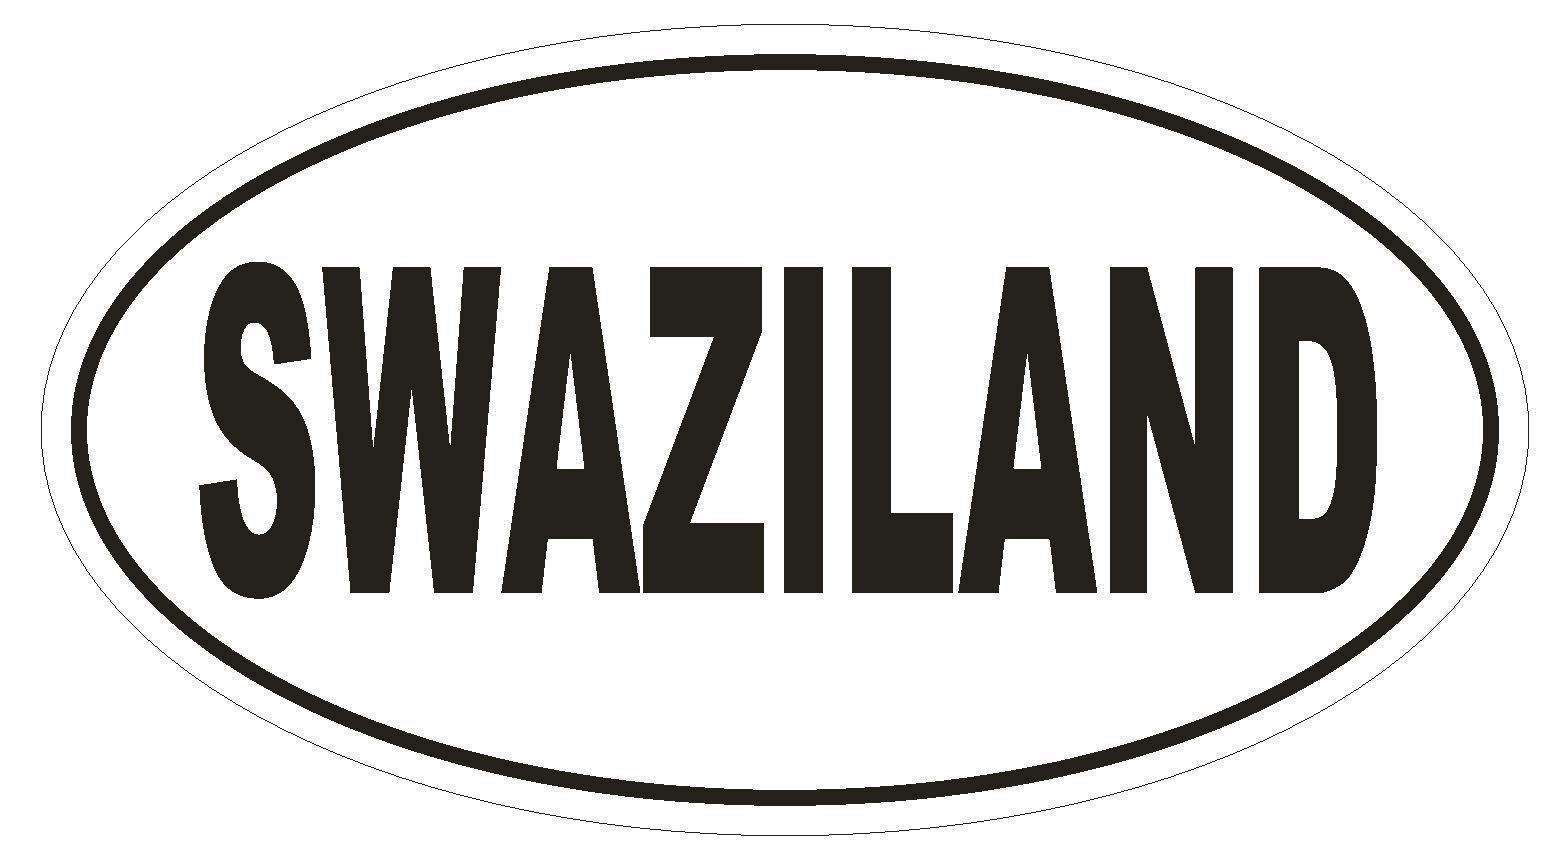 Swaziland Oval Bumper Sticker or Helmet Sticker D2266 Euro Oval Country Code - $1.39 - $75.00